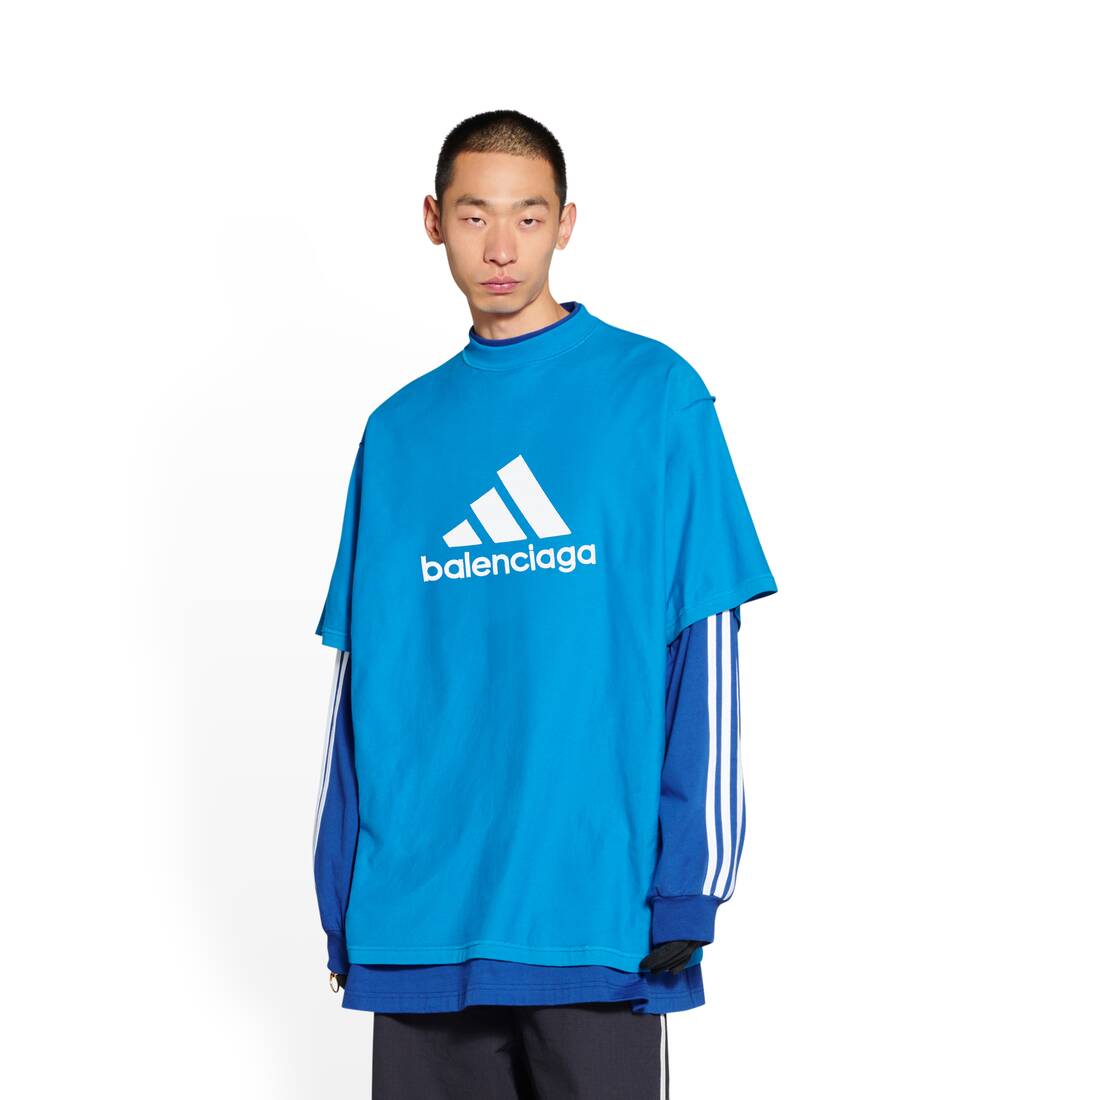 Balenciaga / Adidas T-shirt Oversized in Blue